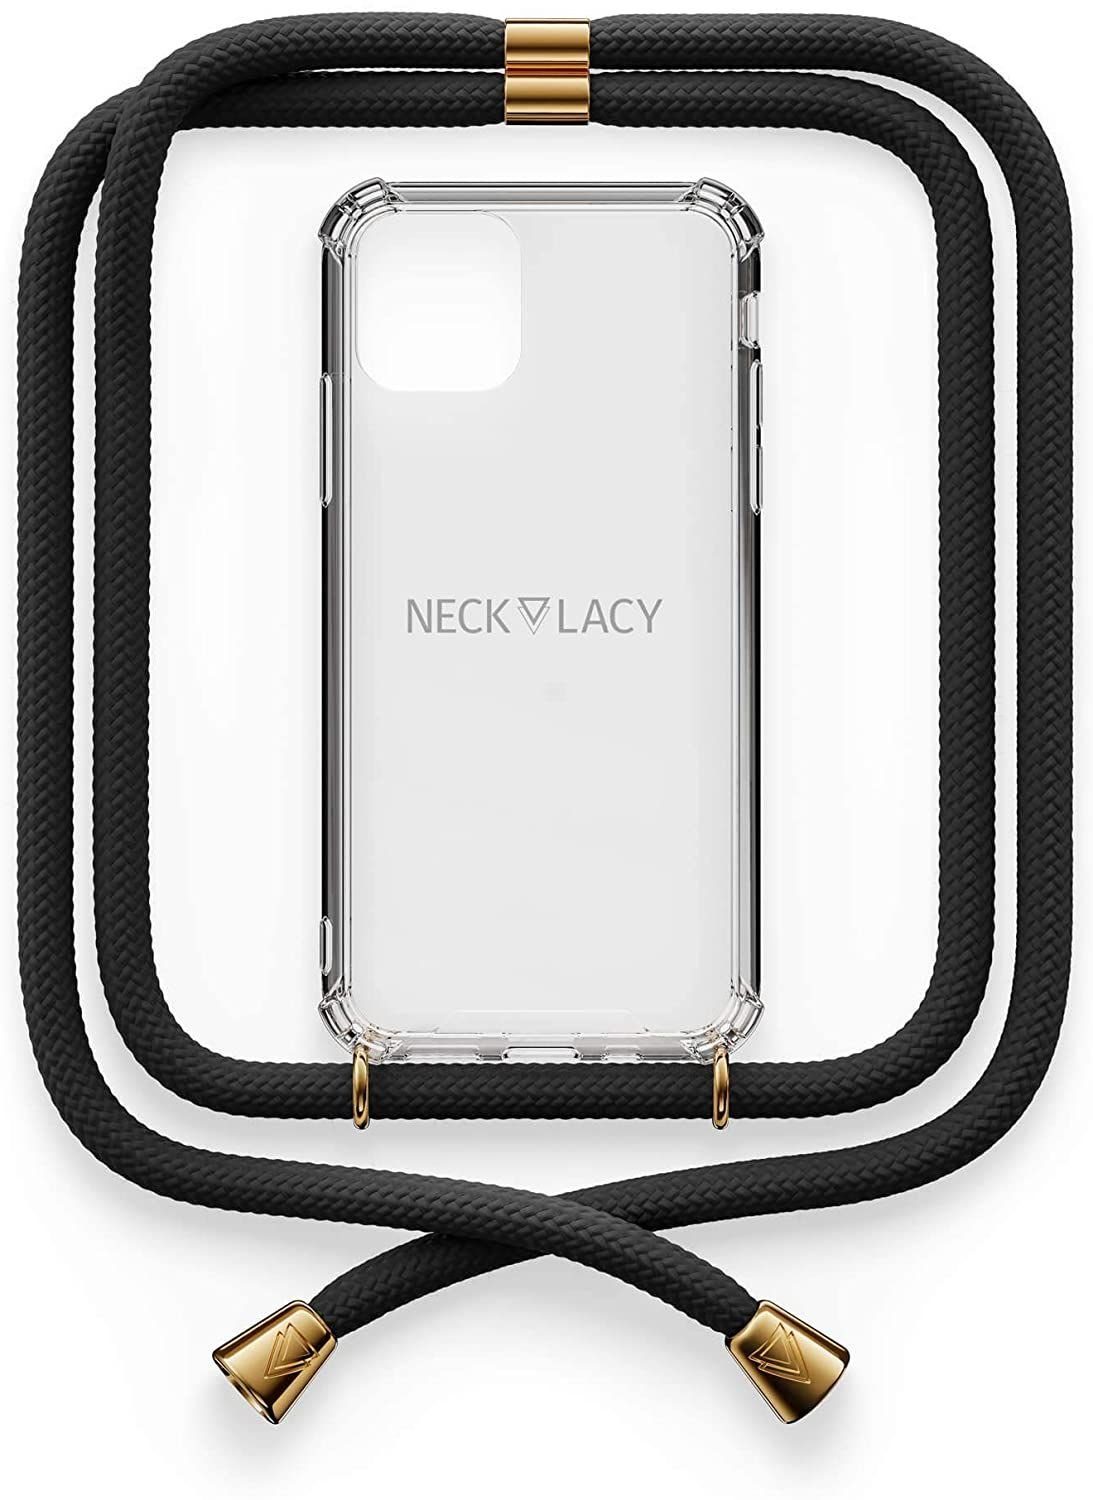 NECKLACY Smartphone-Hülle iPhone 11, iPhone 11 Pro, iPhone 7/8, iPhone X/XS, Länge der Kordel individuell einstellbar